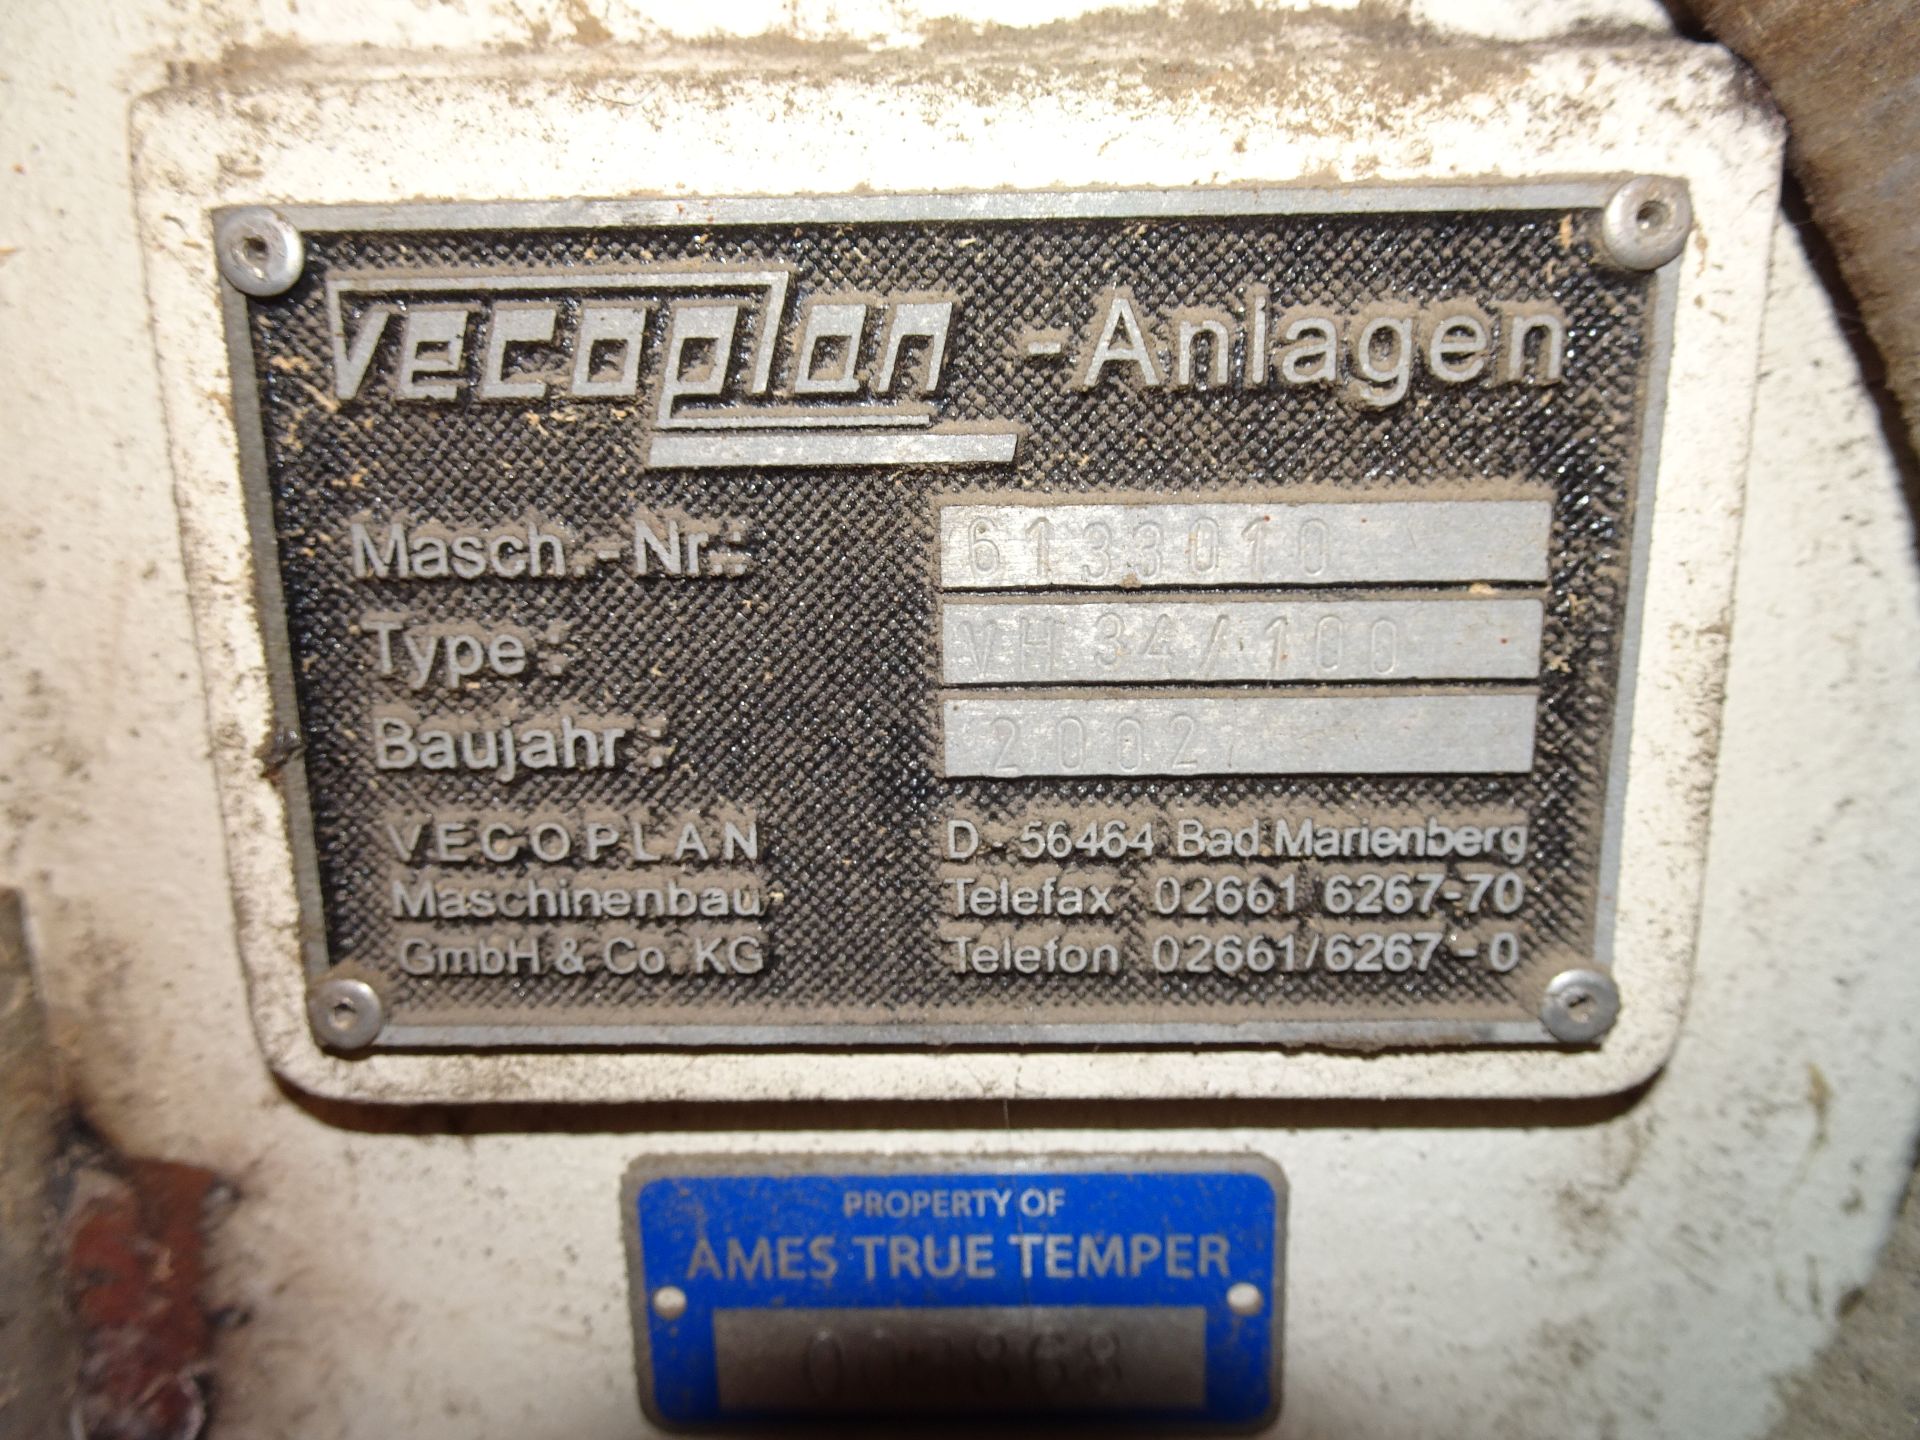 2002 Vecoplan Model VH 34/100 100hp Wood Hog with Reciprocating Feeder, Location: DM Room - Image 2 of 6